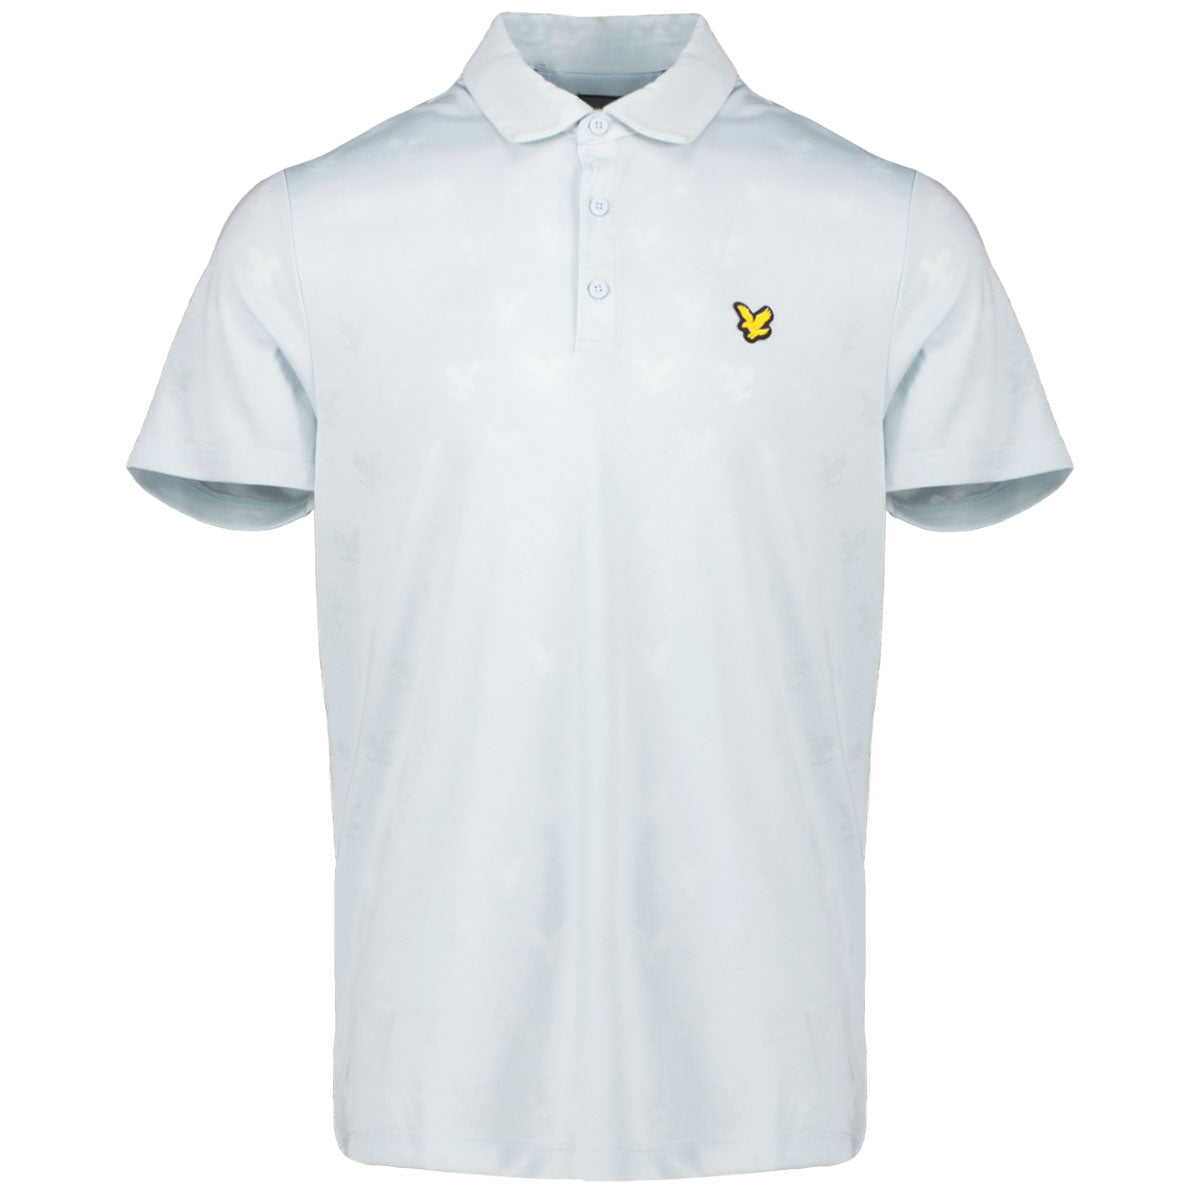 Lyle & Scott Jacquard Golf Polo Shirt SP1562G